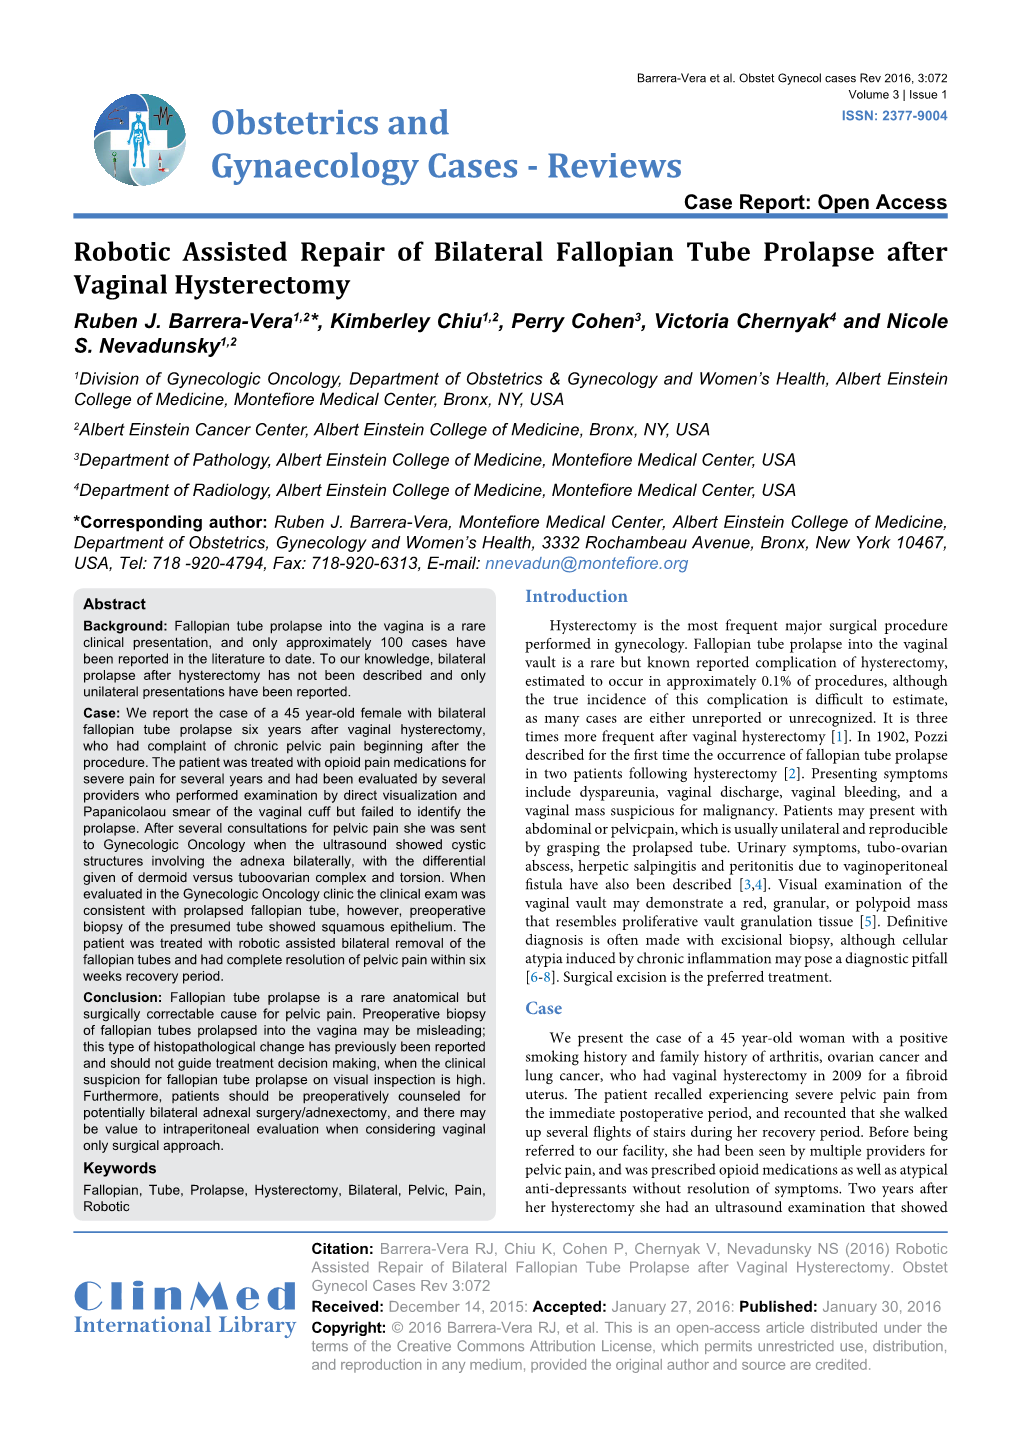 Robotic Assisted Repair of Bilateral Fallopian Tube Prolapse After Vaginal Hysterectomy Ruben J